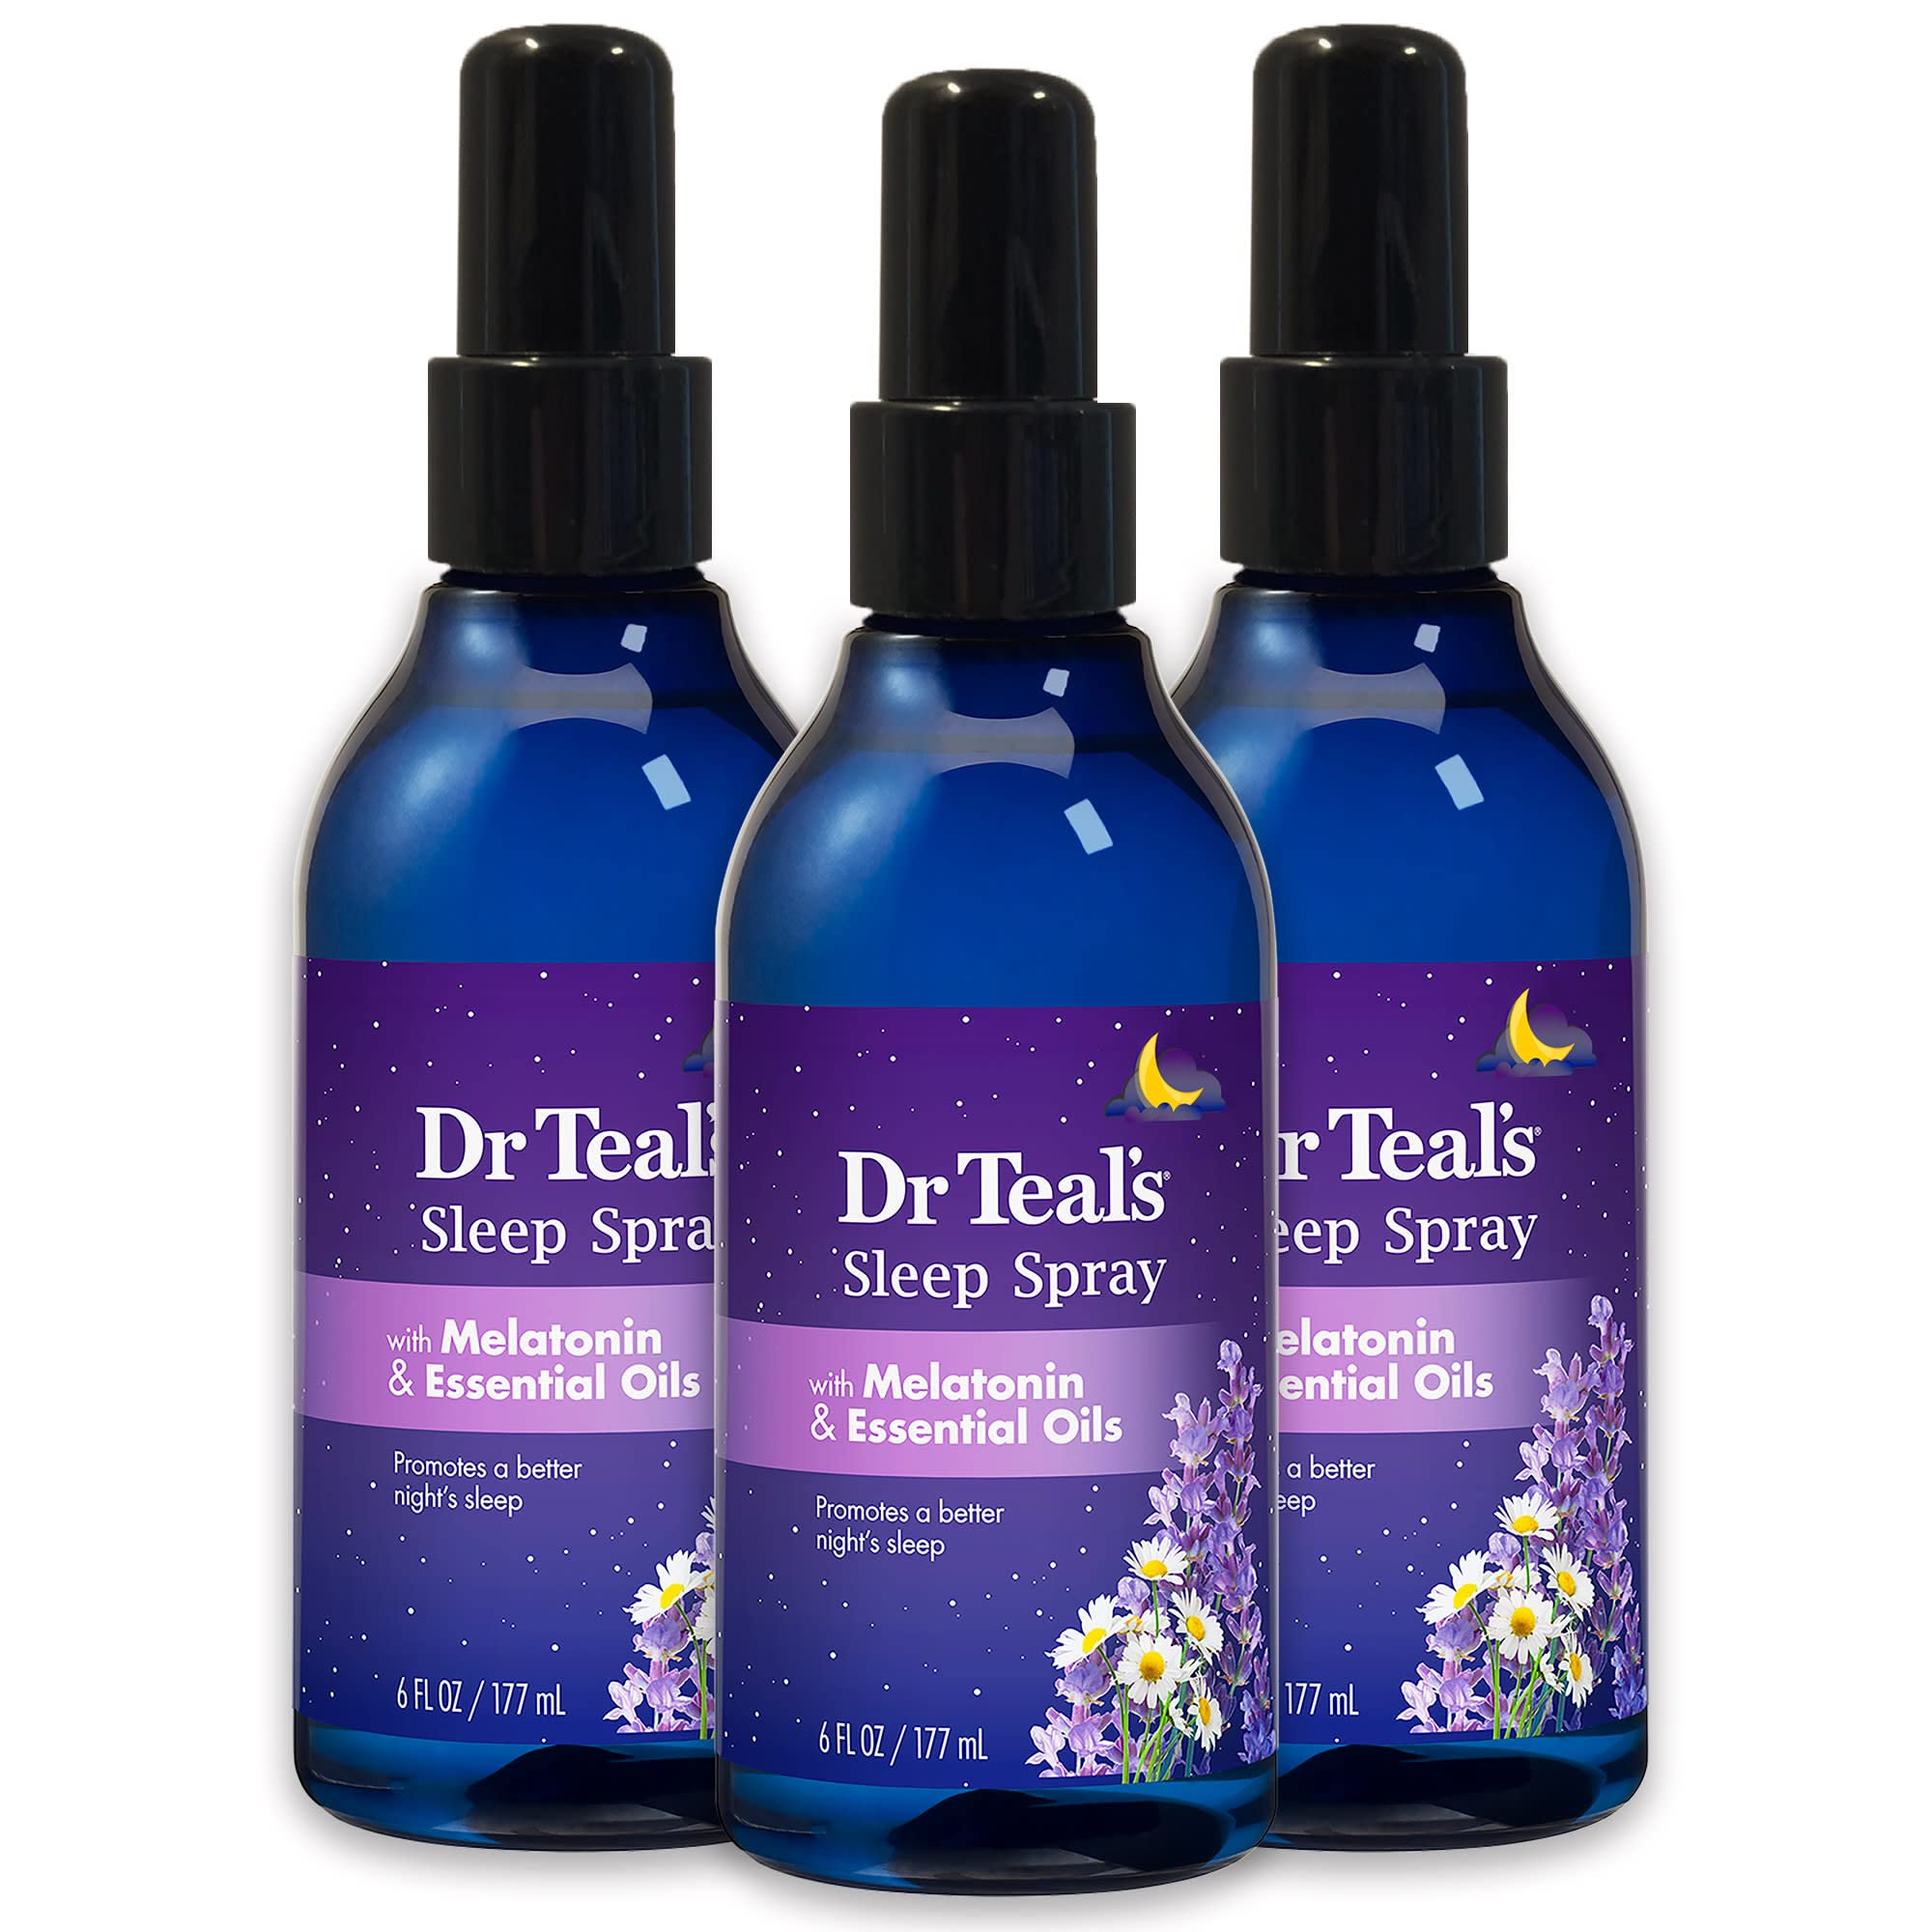 Dr Teal's Sleep Spray, Melatonin & Essential Oils, 6 fl oz (Pack of 3) & Foaming Bath with Pure Epsom Salt, Melatonin Sleep Soak with Essential Oil Blend, 34 fl oz (Pack of 4)